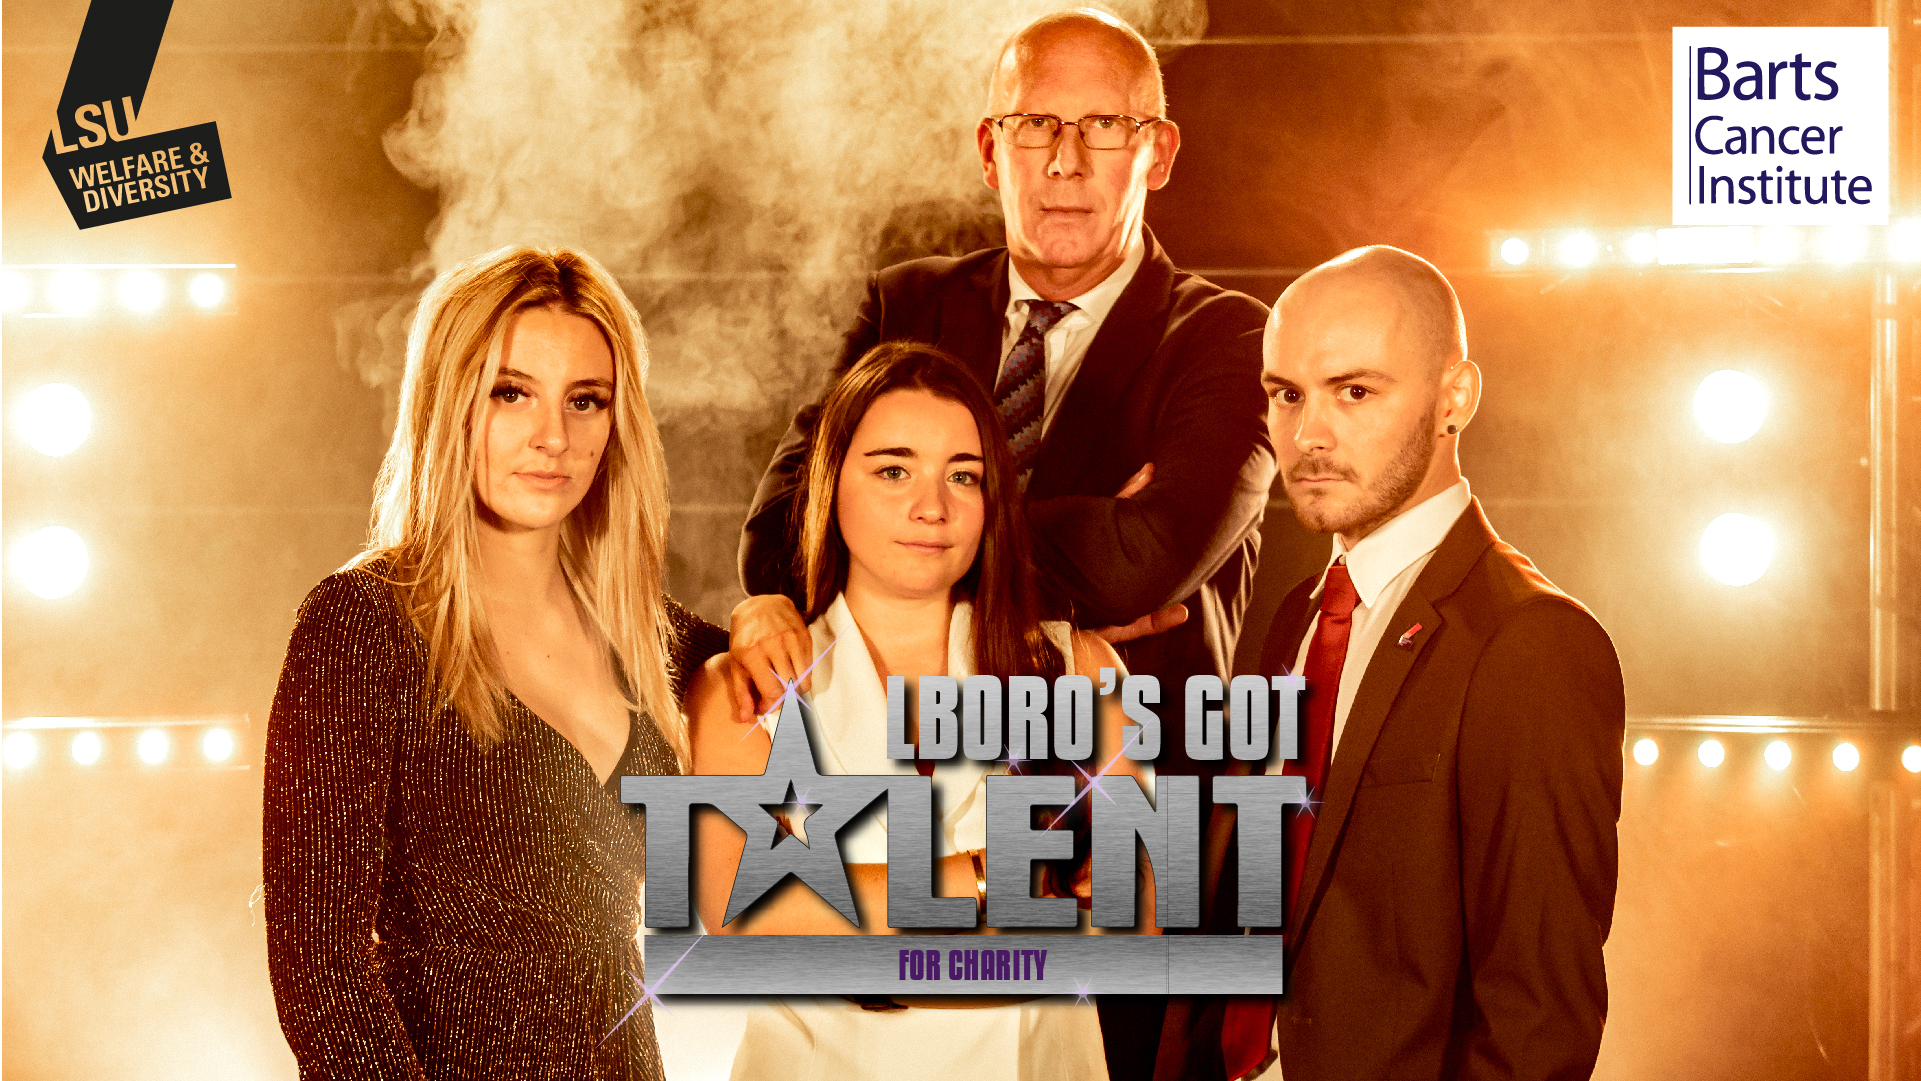 Poster promoting Lboro's Got Talent